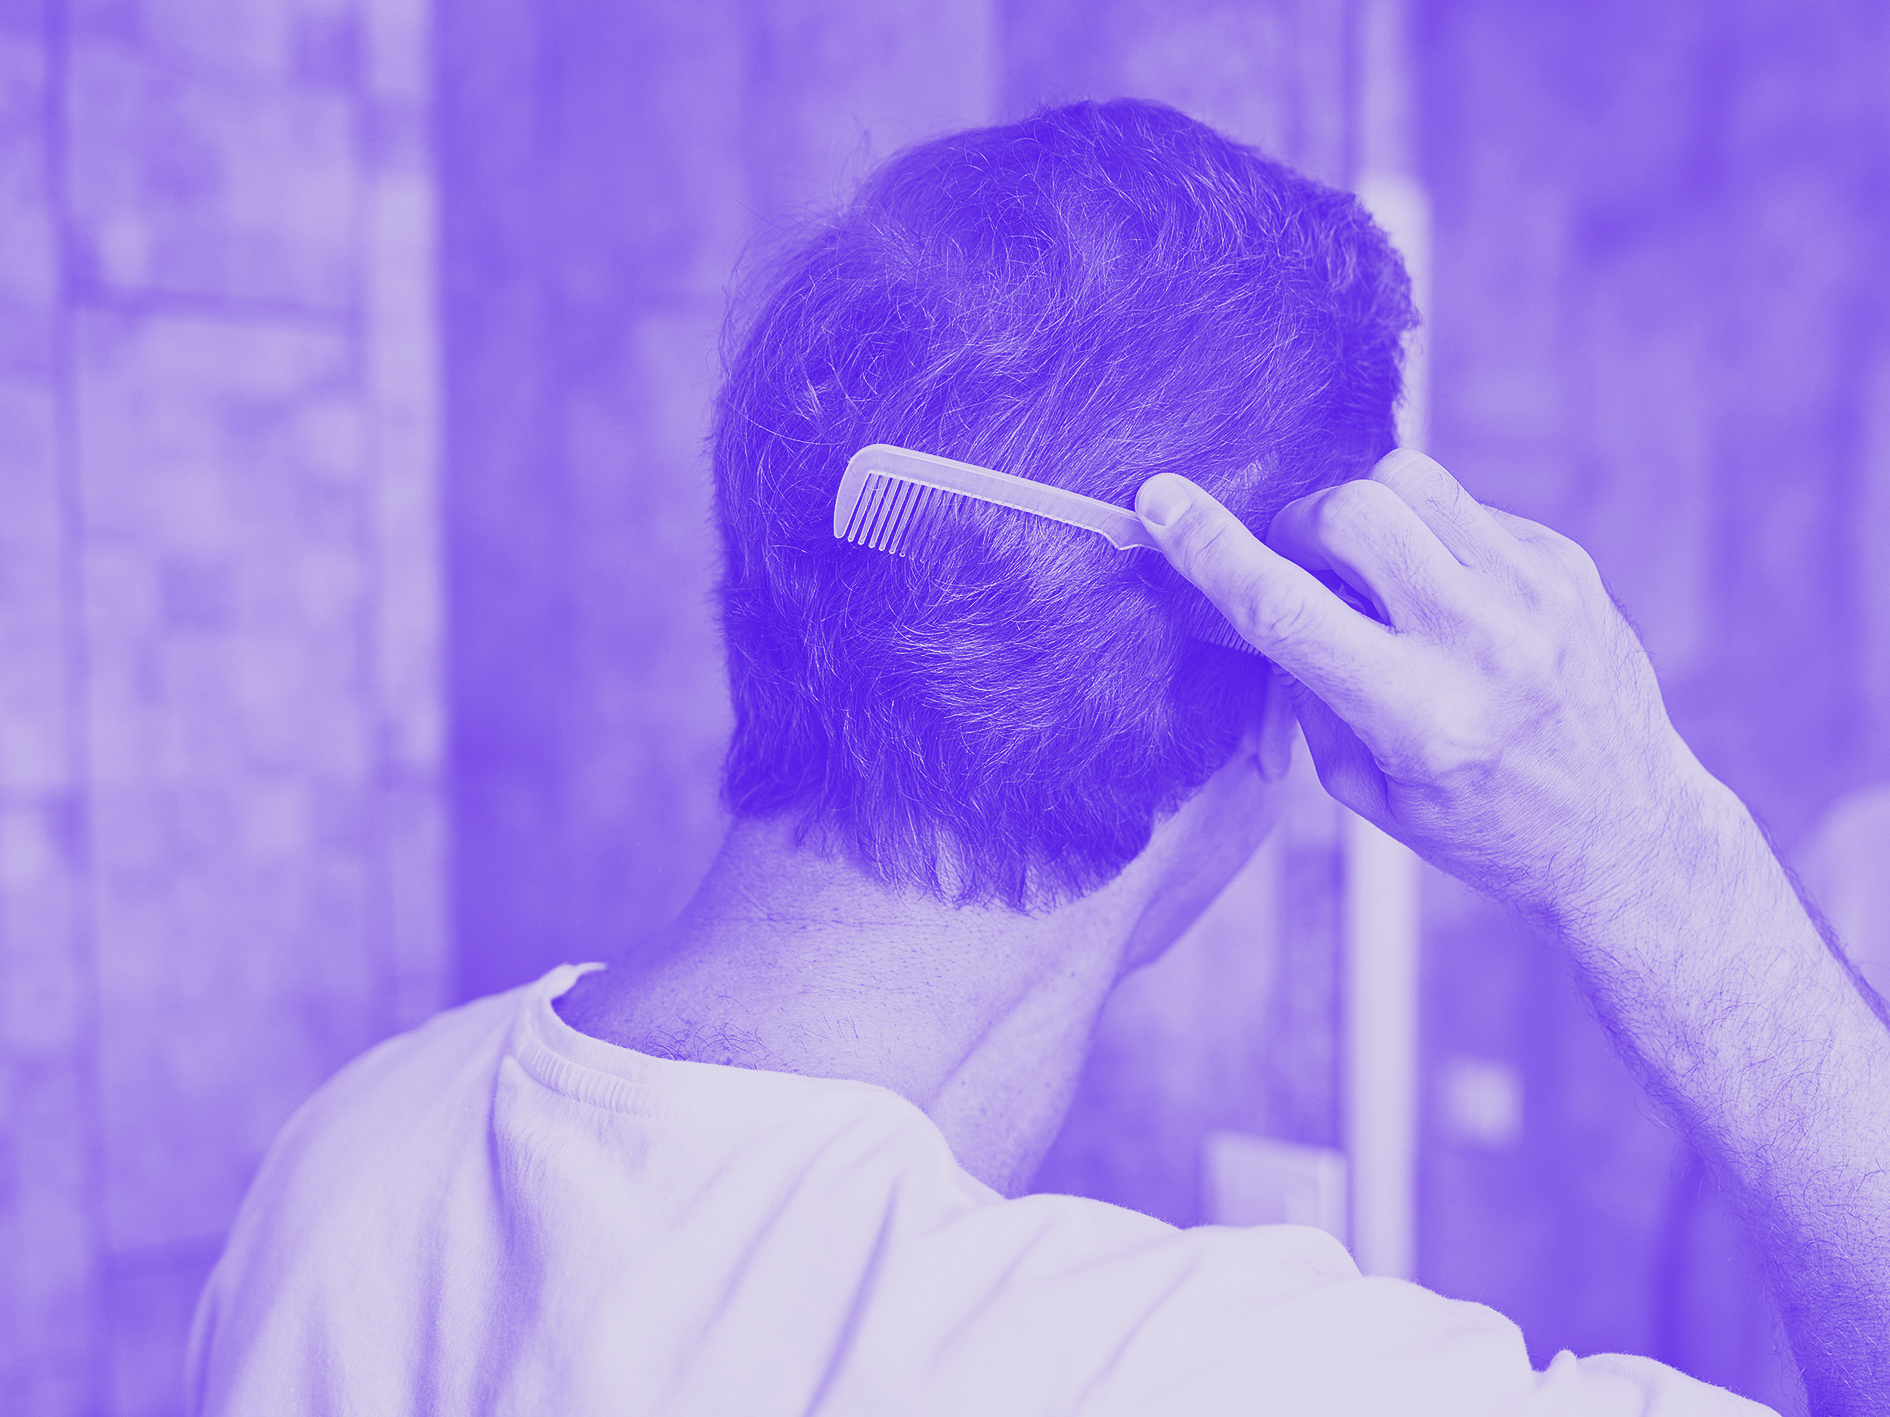 When Do Men Start To Lose Hair?